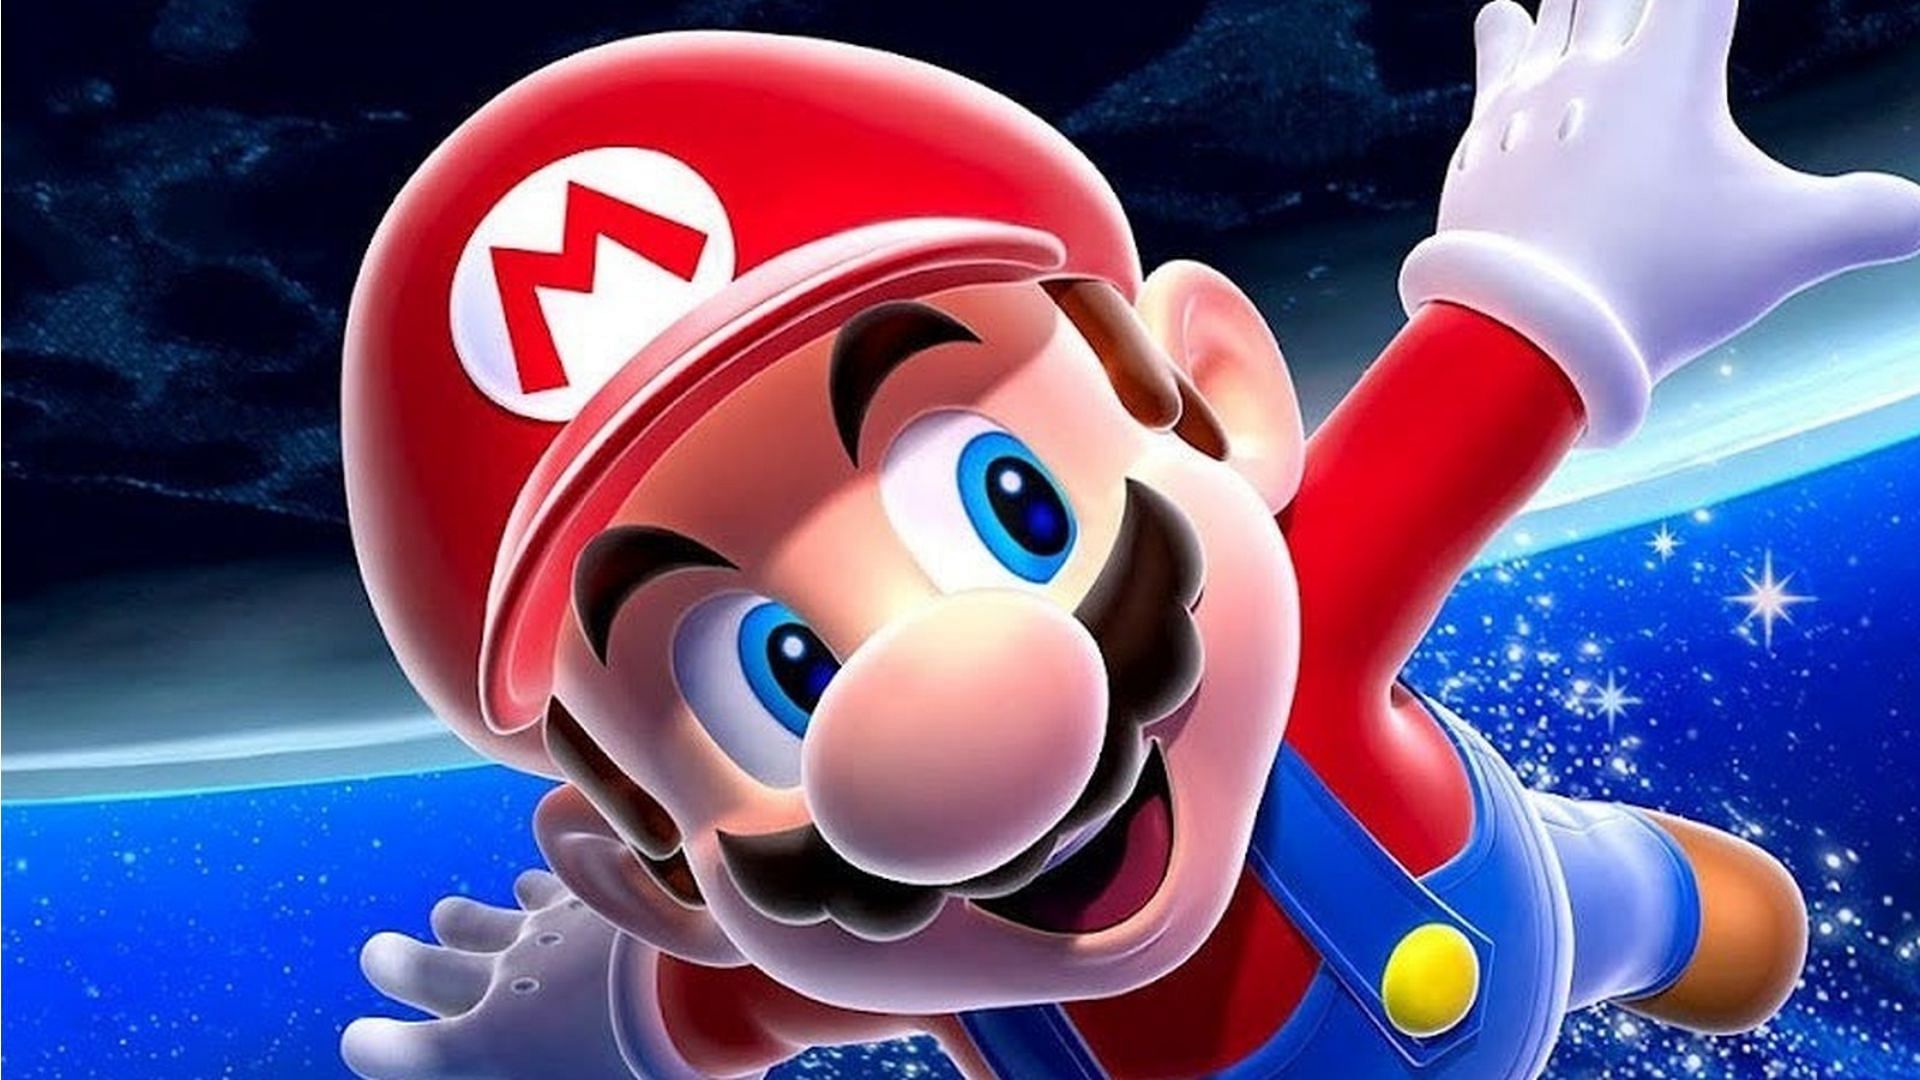 Mario&#039;s original name was Jumpman (Image via Looper)